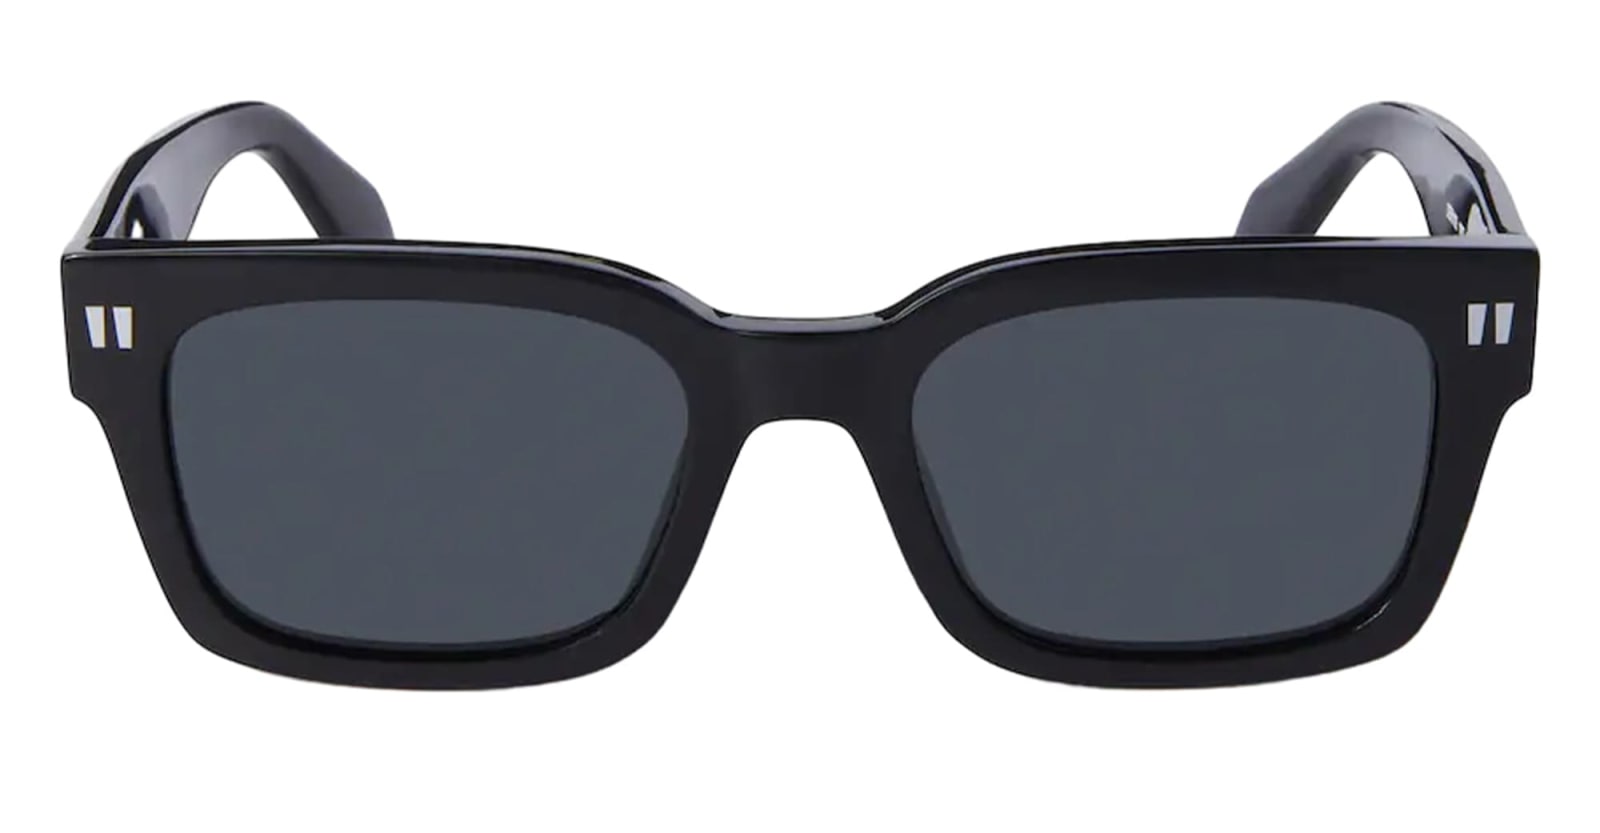 Off-white Midland - Black / Dark Grey Sunglasses